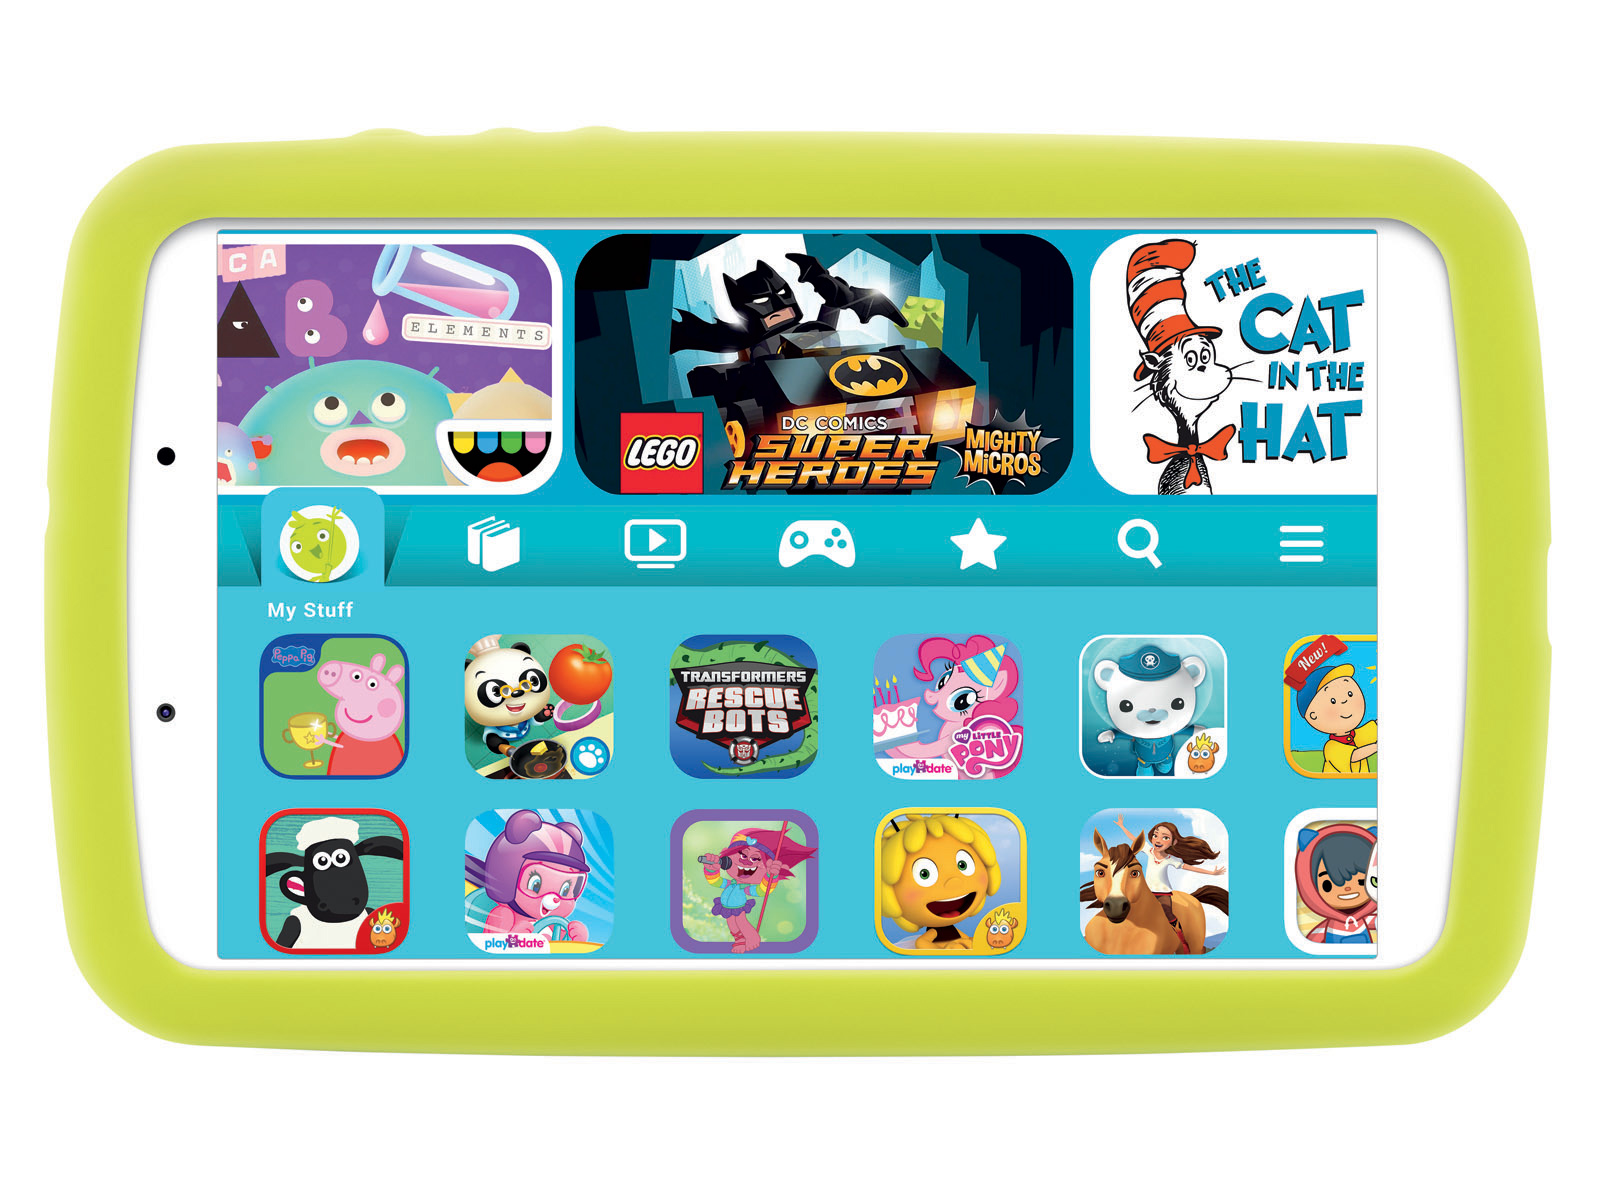 Rennen leerling Elastisch Samsung Galaxy Tab A Kids Edition (2019), 32GB, Silver (WiFi) Tablets -  SM-T290NZSKXAR | Samsung US